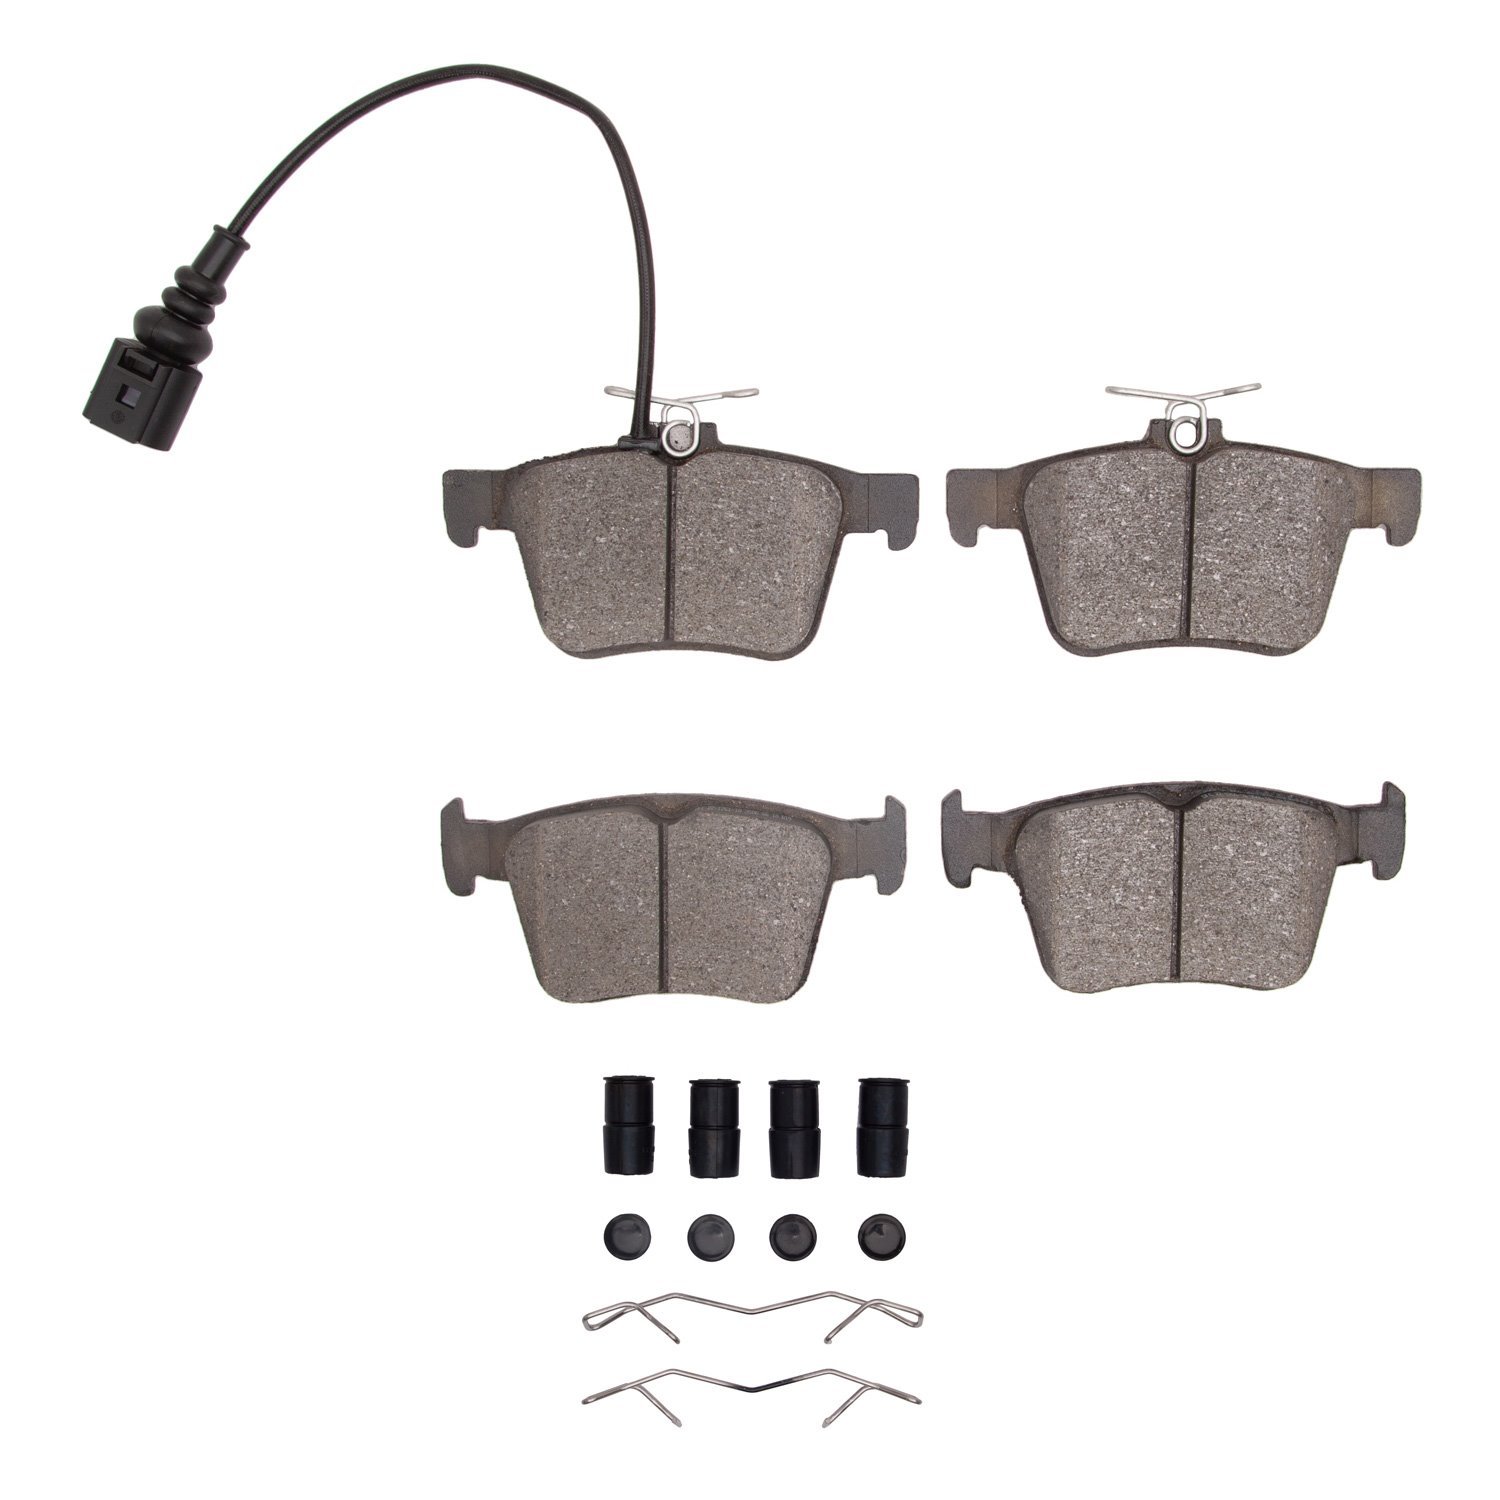 1310-1761-01 3000-Series Ceramic Brake Pads & Hardware Kit, Fits Select Multiple Makes/Models, Position: Rear